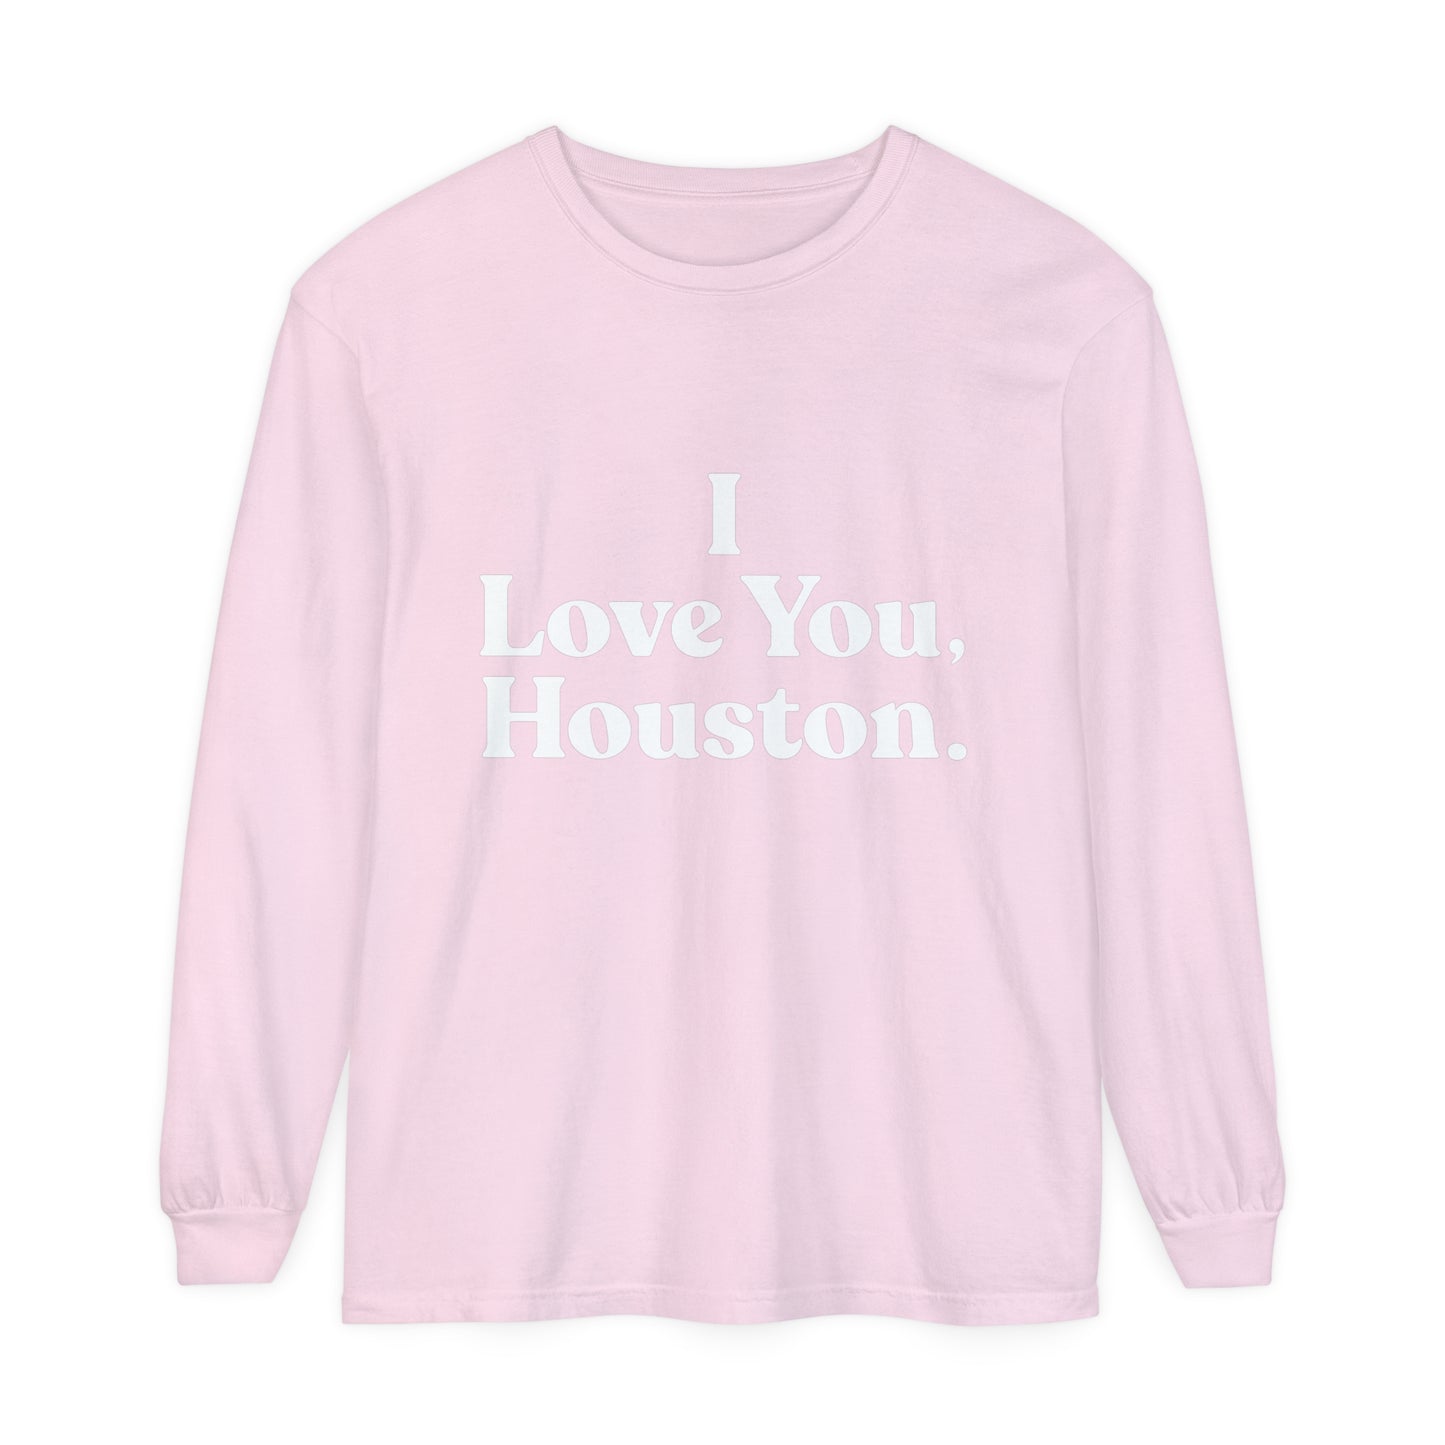 I Love You, Houston Long Sleeve Tee